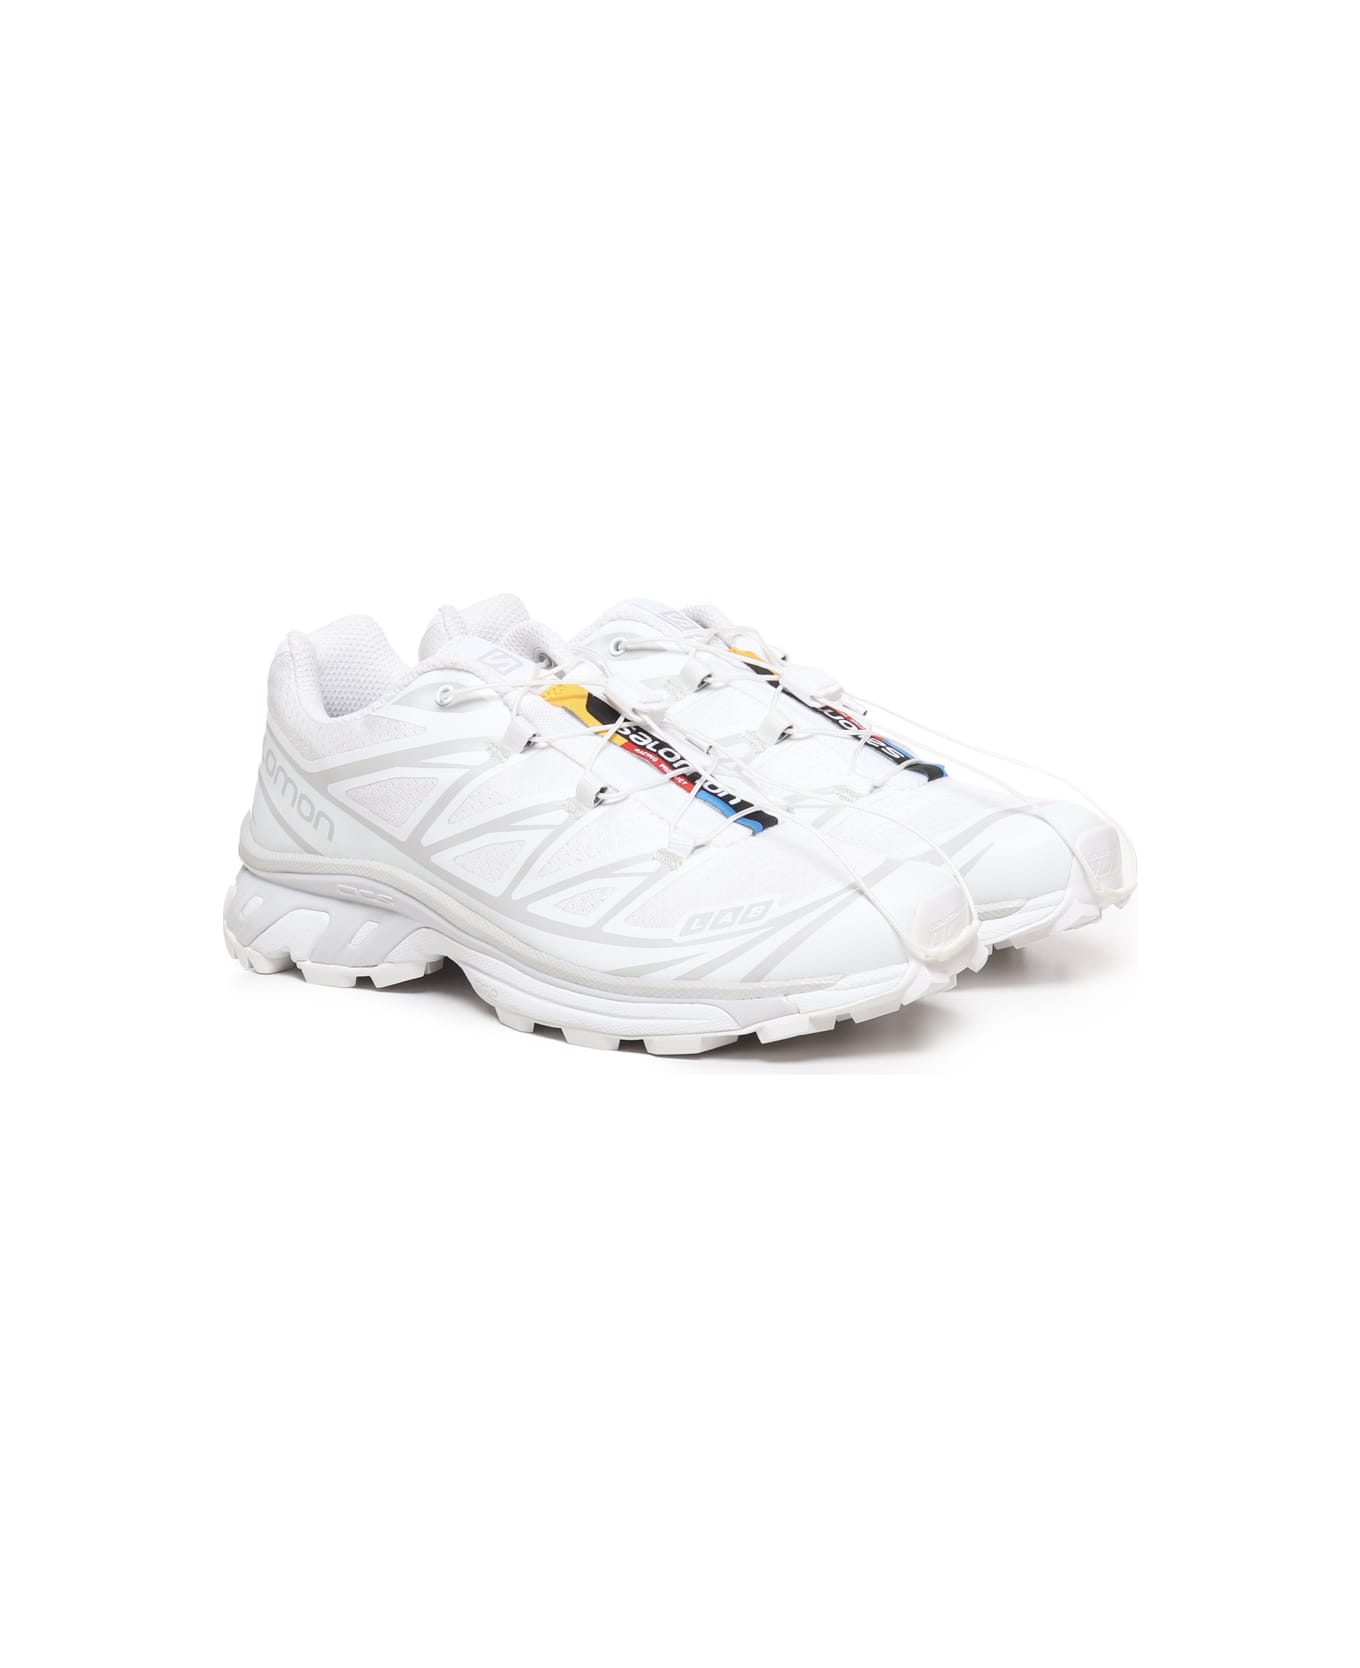 Salomon Xt-6 Sport Shoes - White